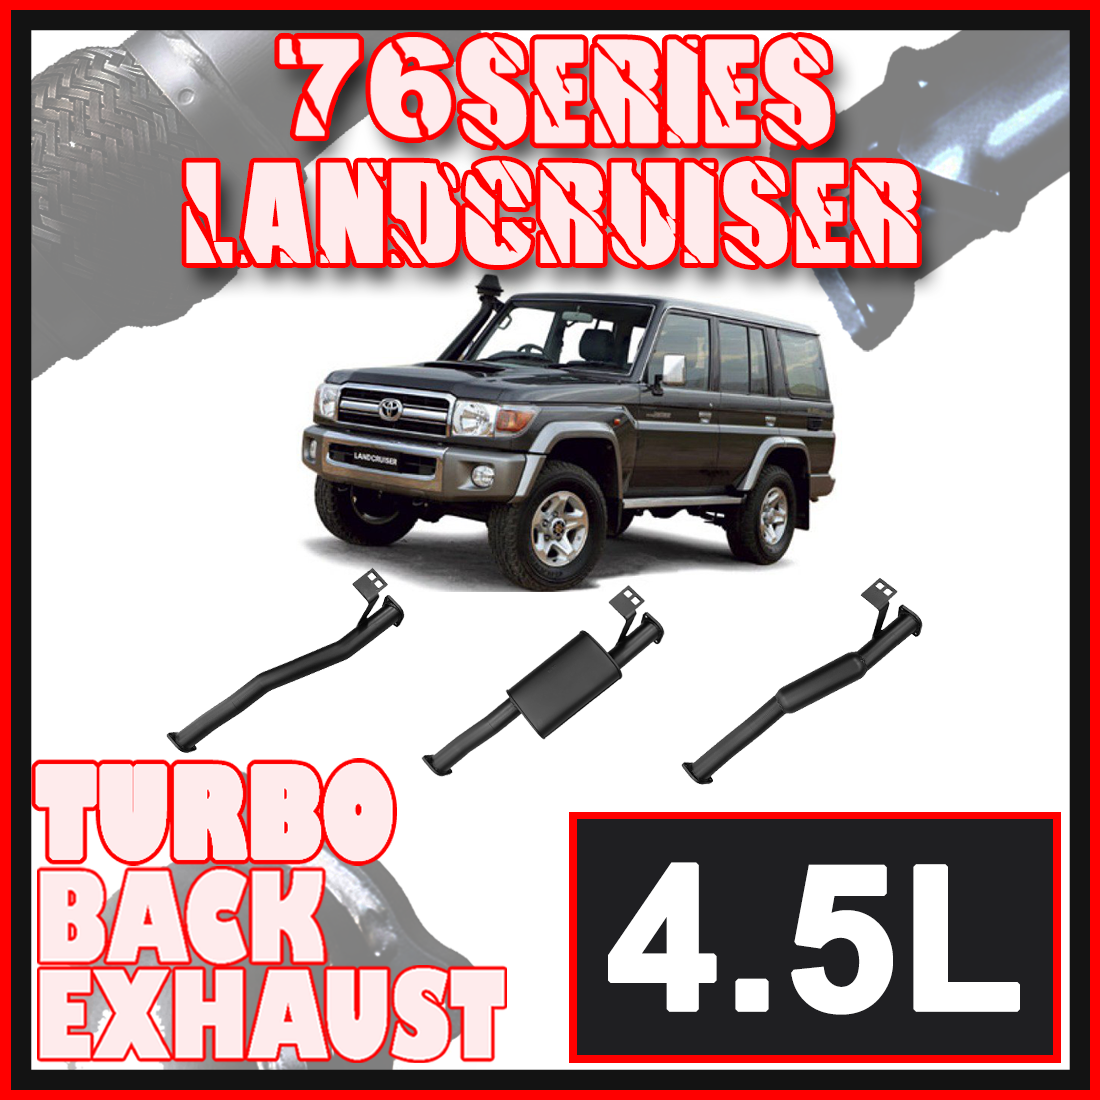 Toyota Landcruiser 76 Series Wagon Ignite Exhaust image